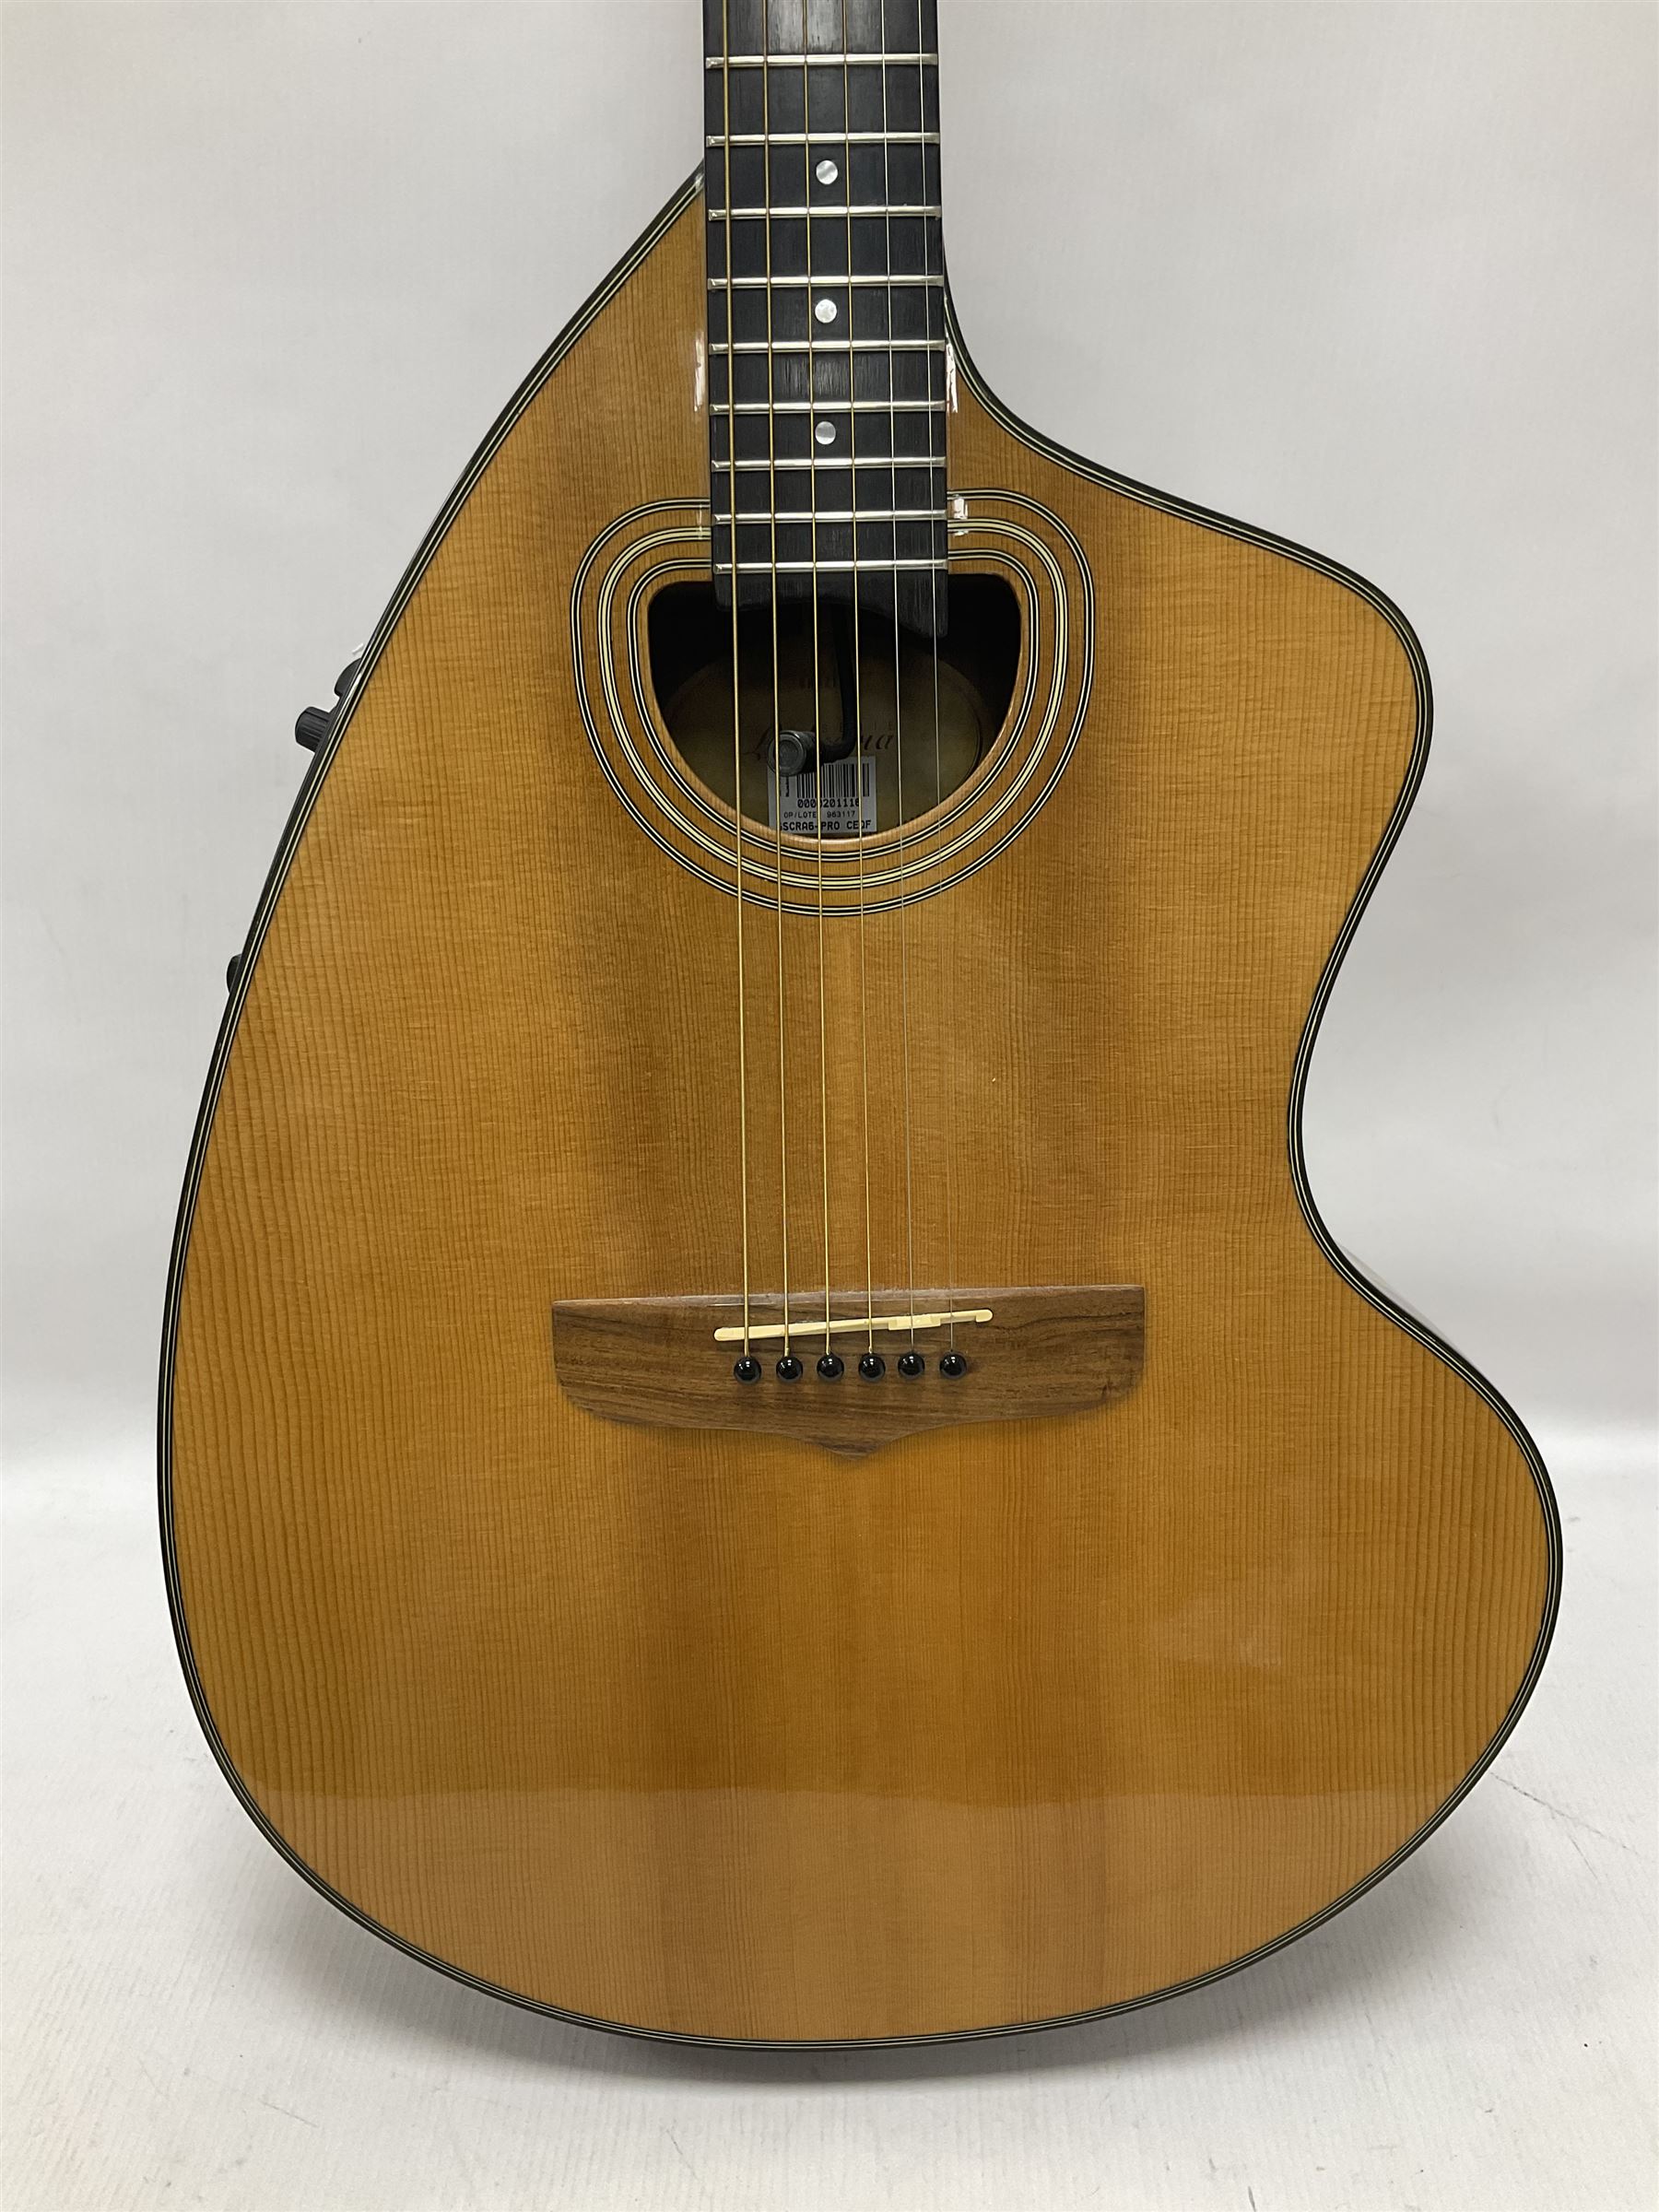 Brazilian Giannini Craviola six string acoustic guitar - Image 6 of 21